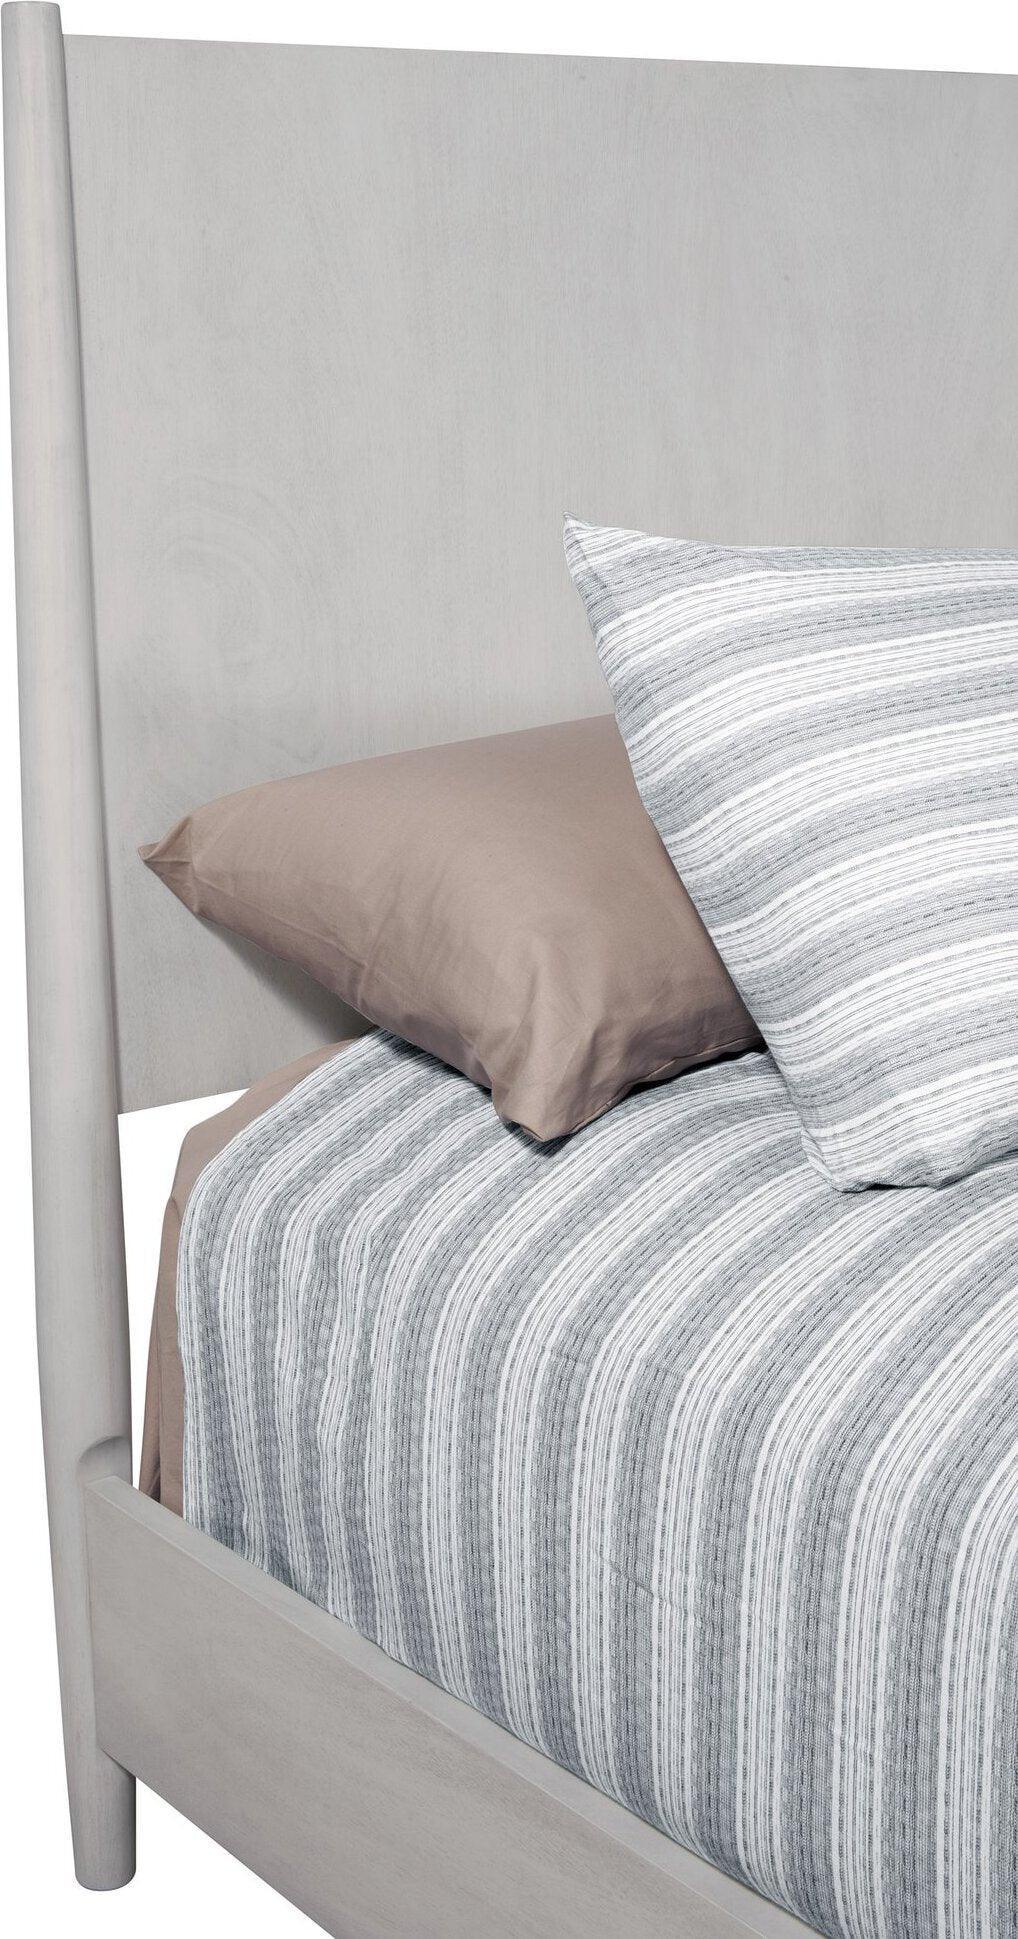 Alpine Furniture Beds - Flynn Queen Panel Bed Gray